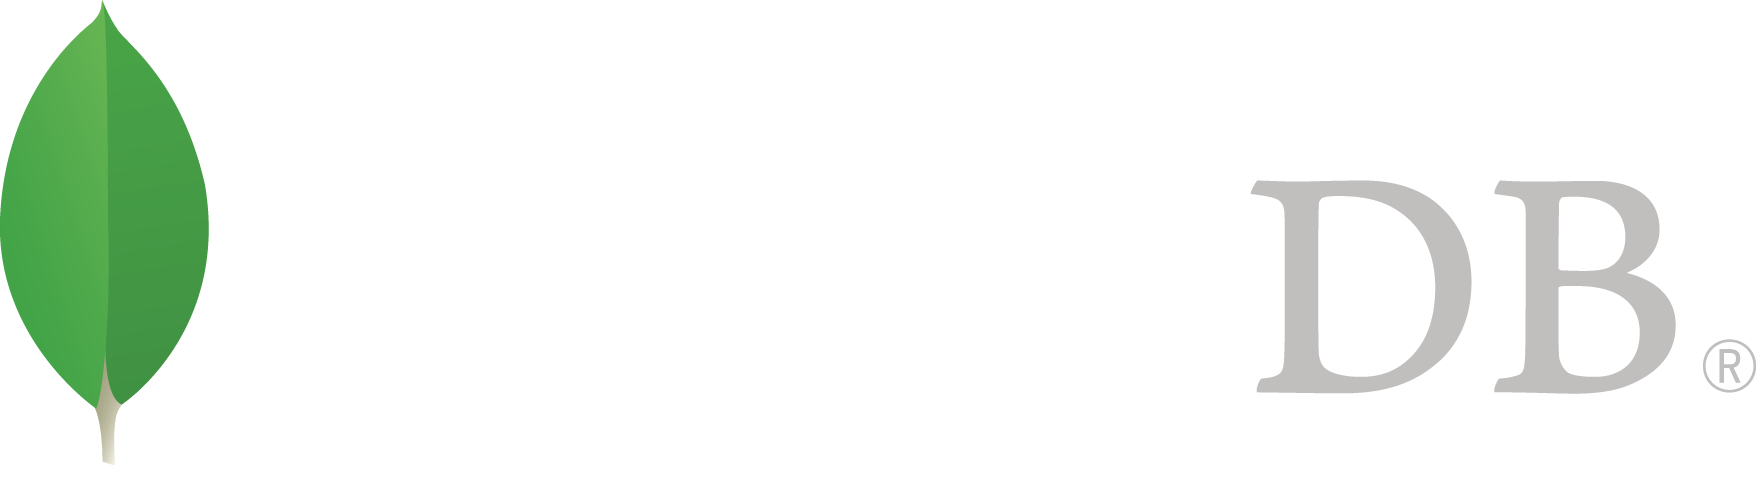 MongoDB Logo - Mongodb Logo White